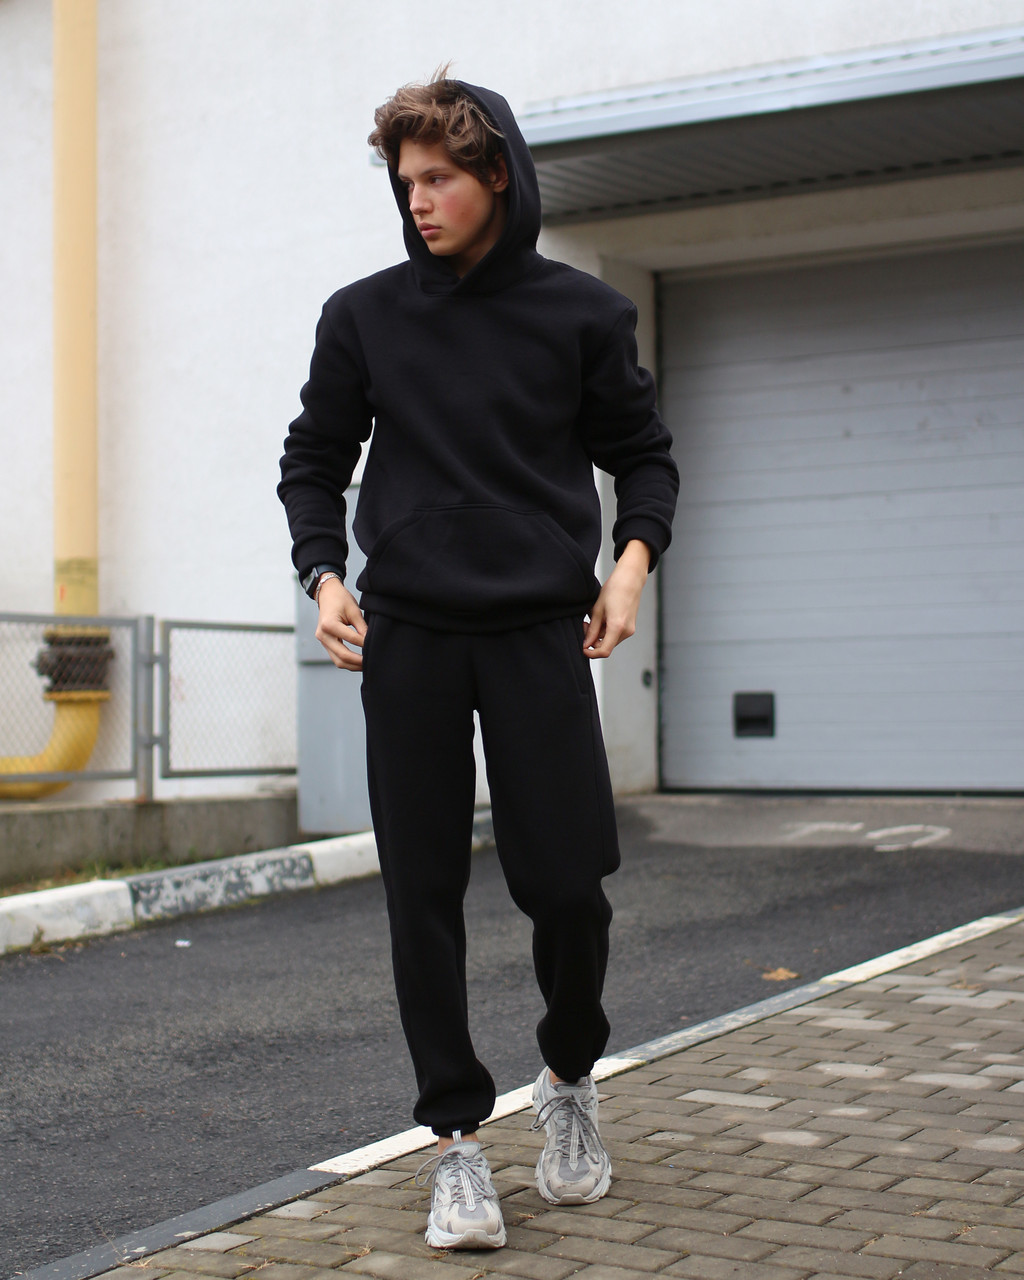 Утеплённый спортивный костюм мужской черный Стандарт от бренда Тур TURWEAR - Фото 4